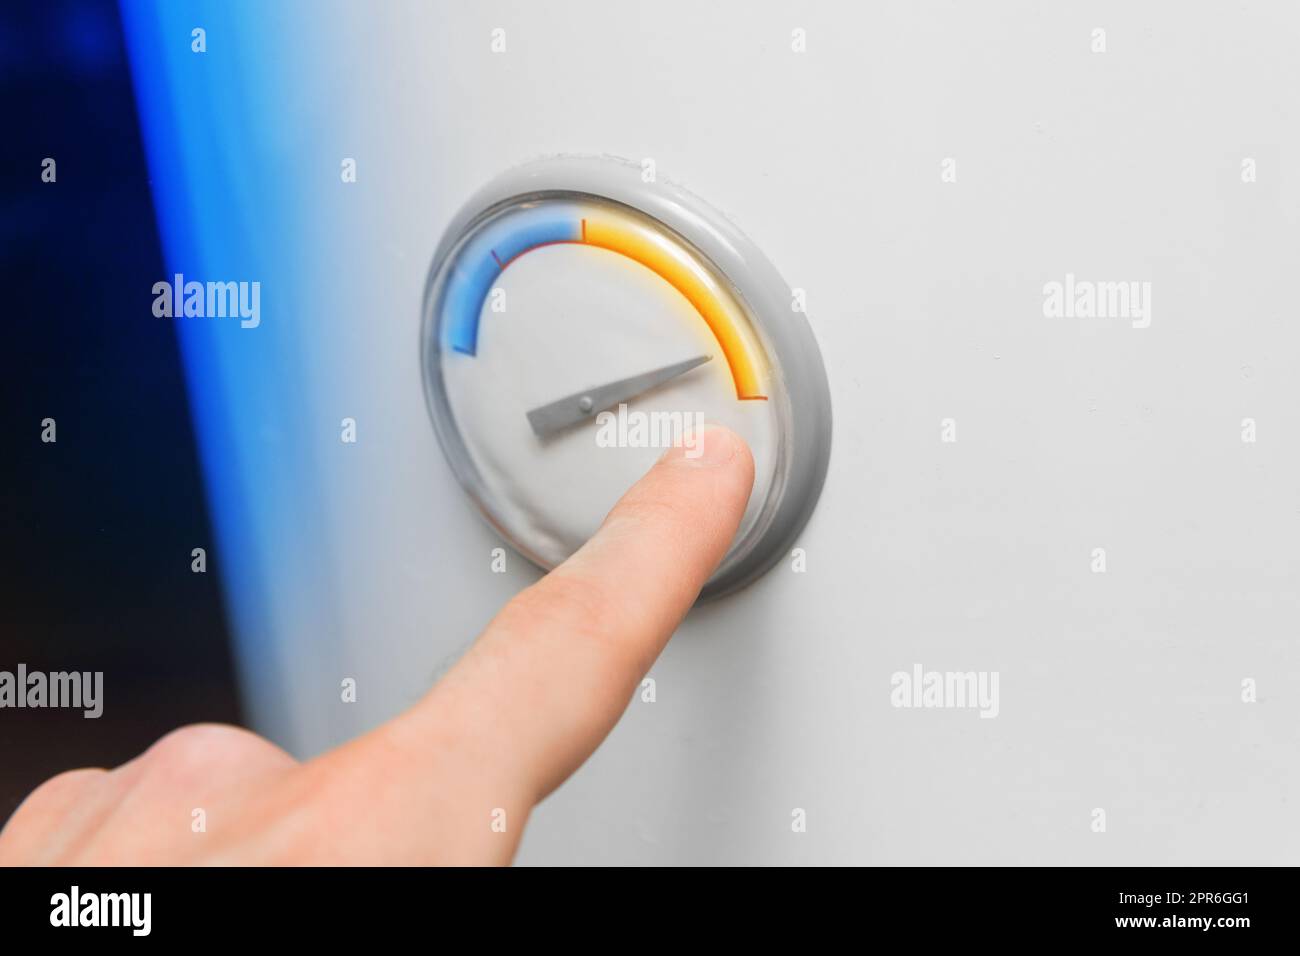 Temperatura caldaia termometro controllo manometro sistema indicatore acqua. Foto Stock